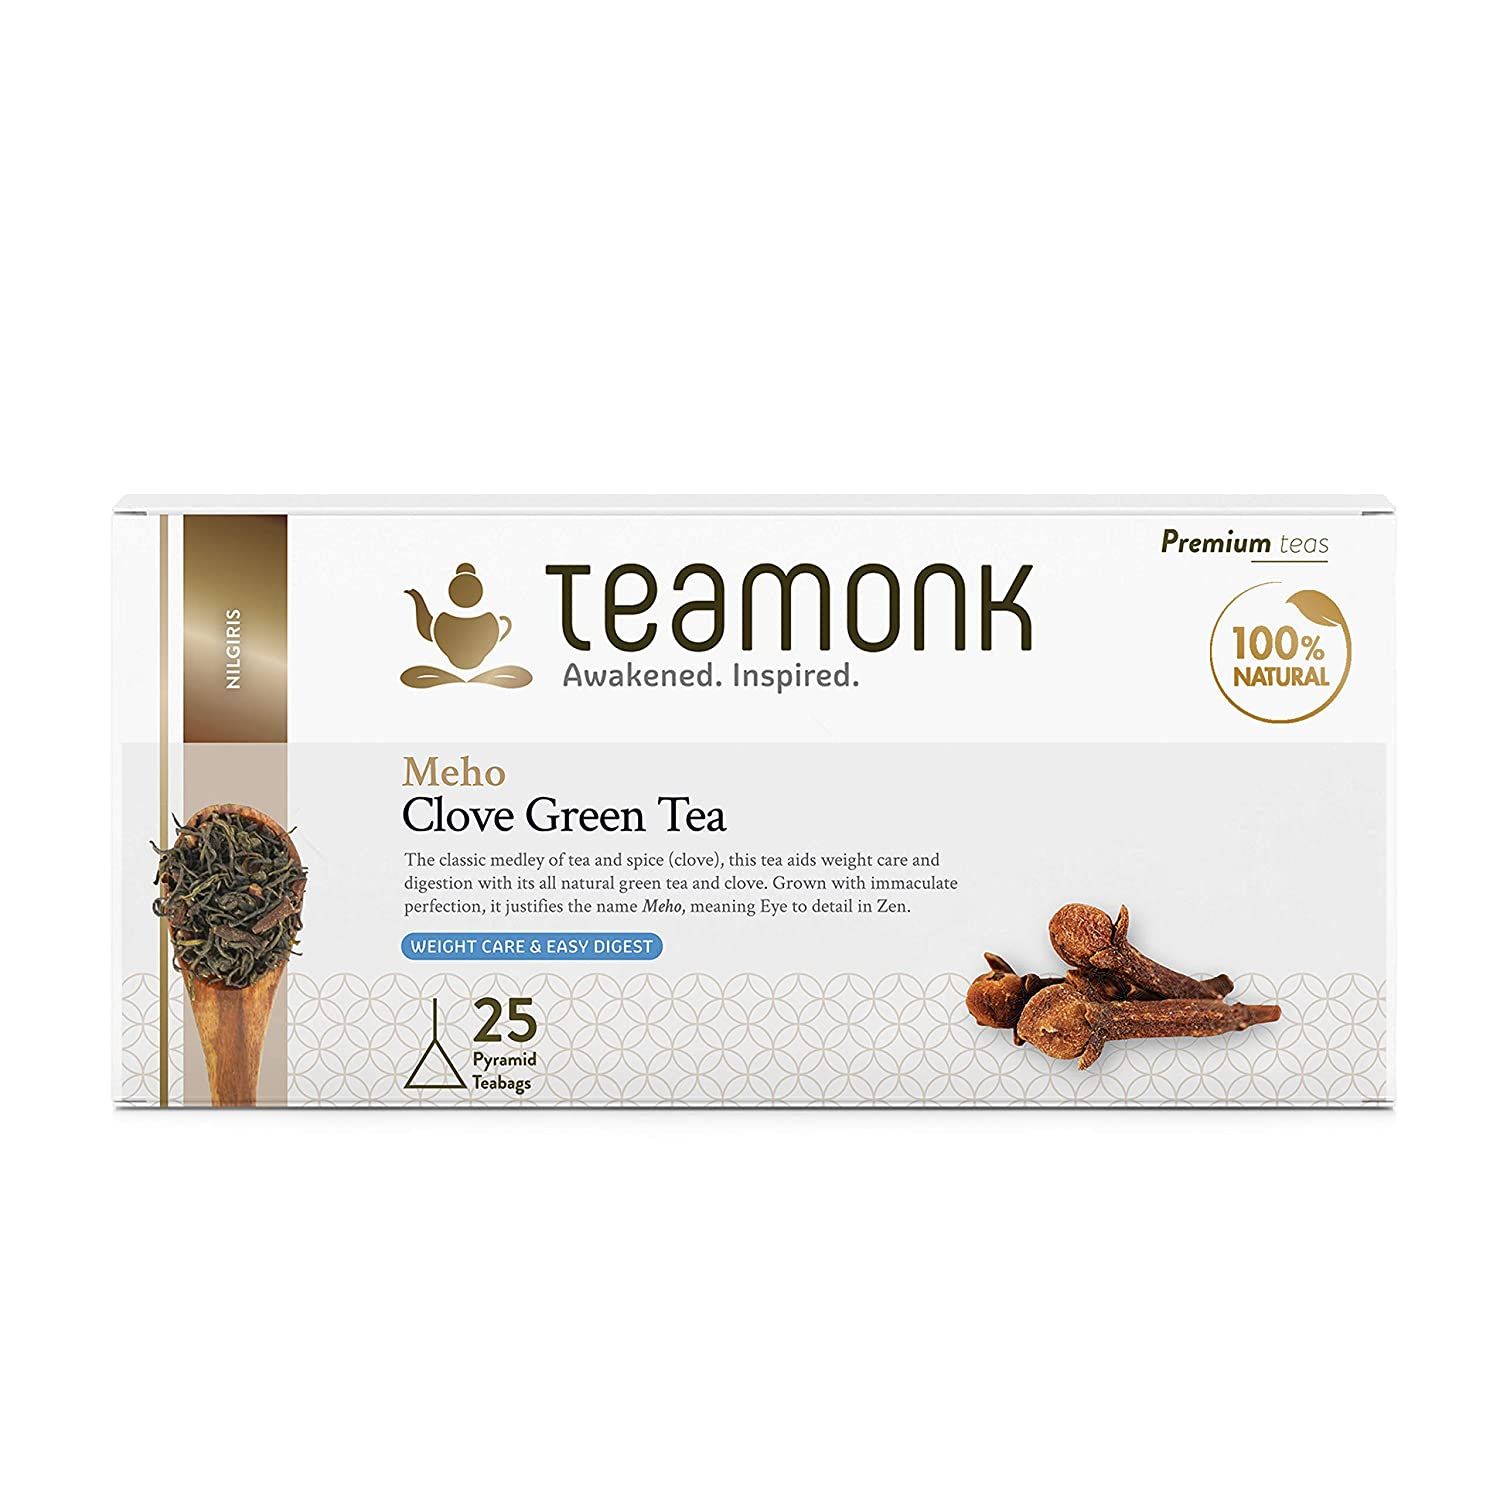 Teamonk Clove Green Tea Image